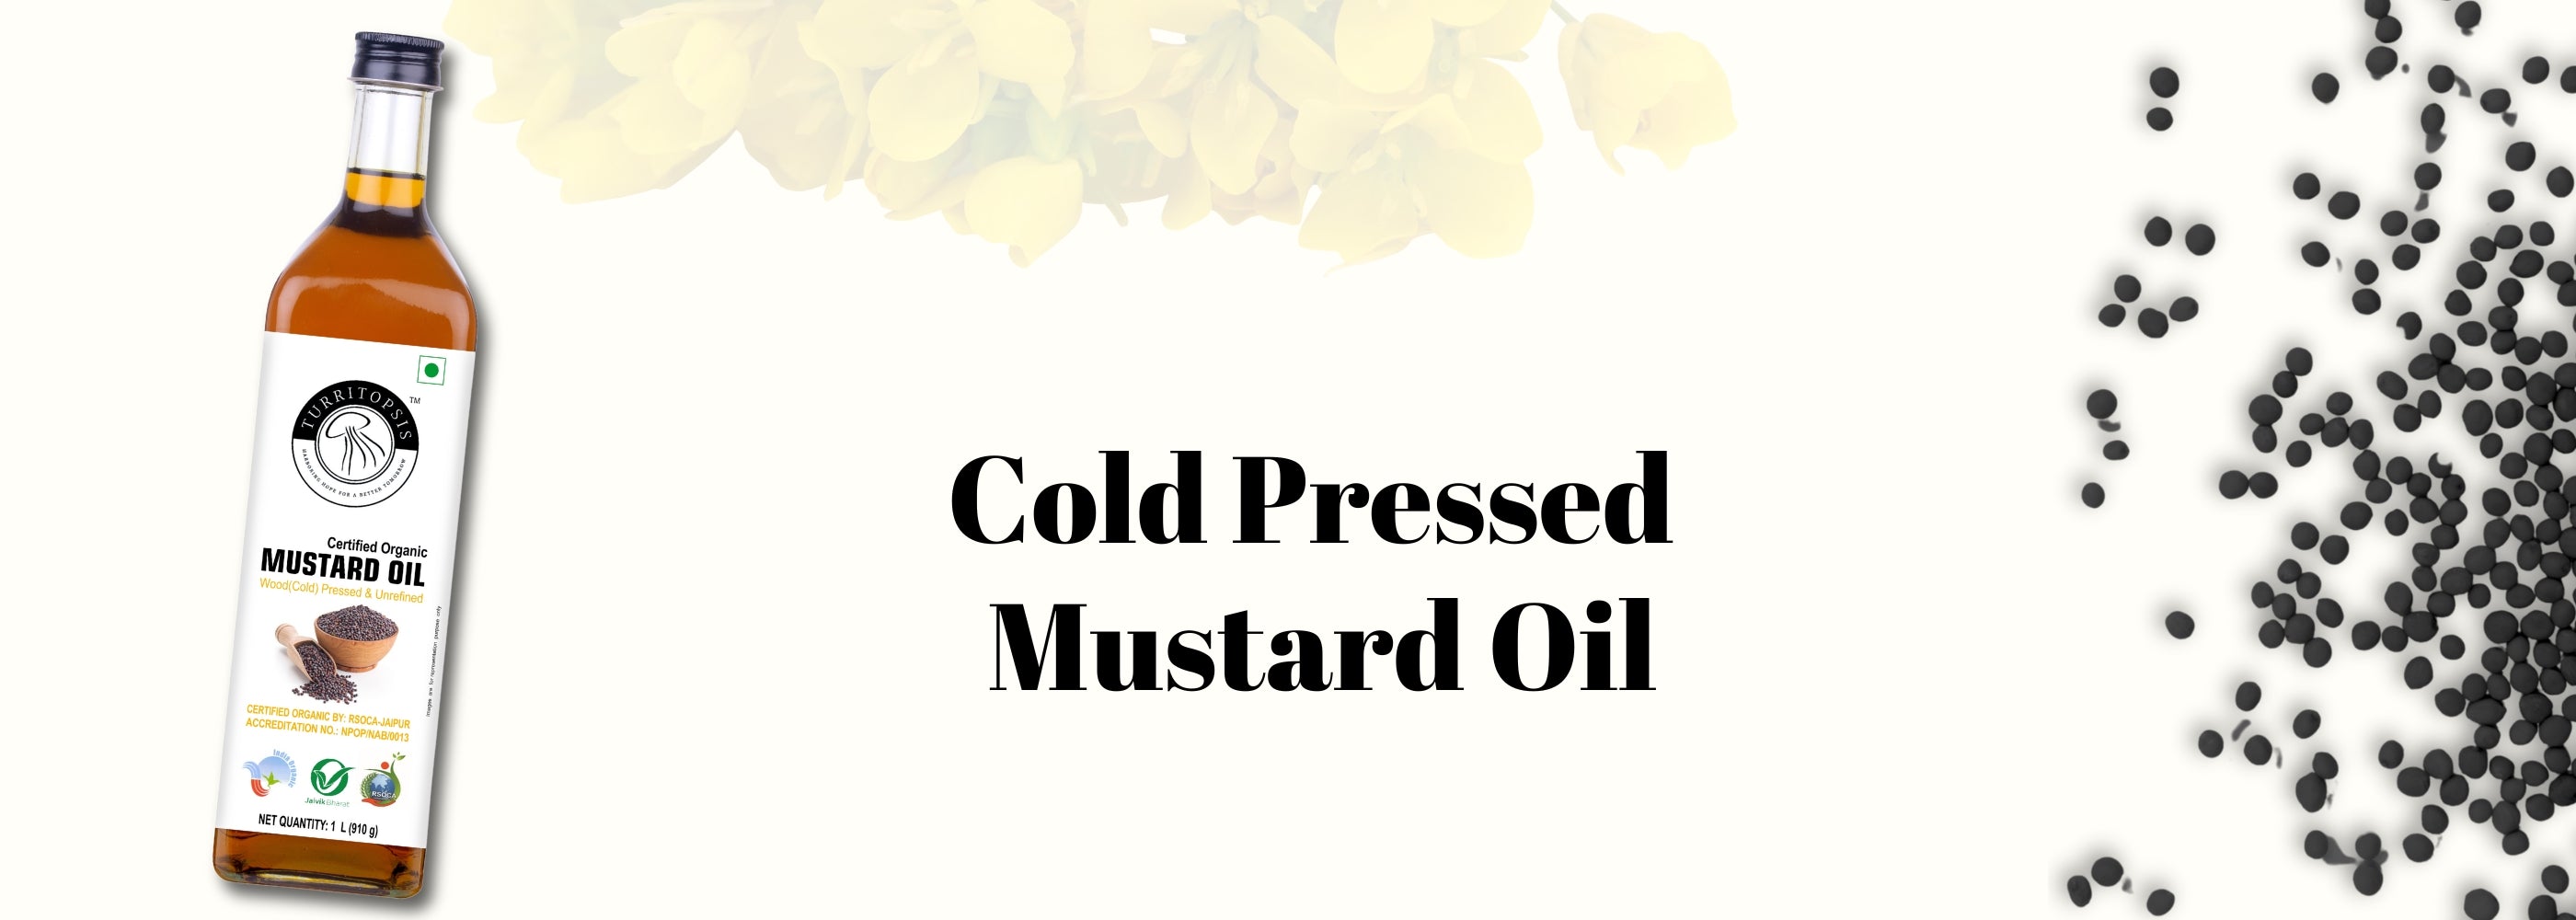 Wood pressed mustard oil